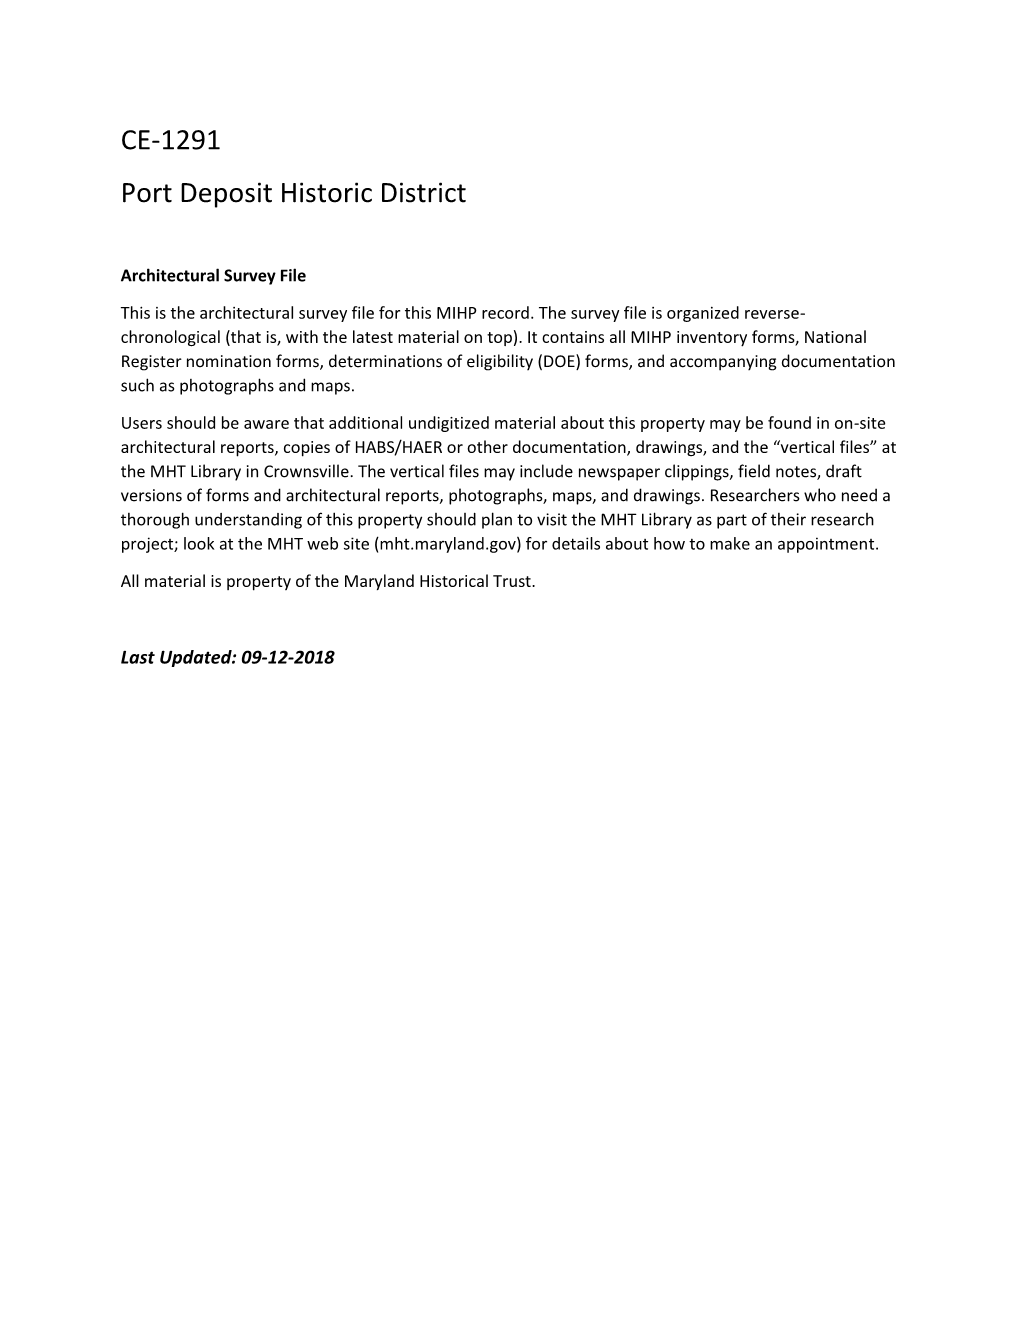 CE-1291 Port Deposit Historic District